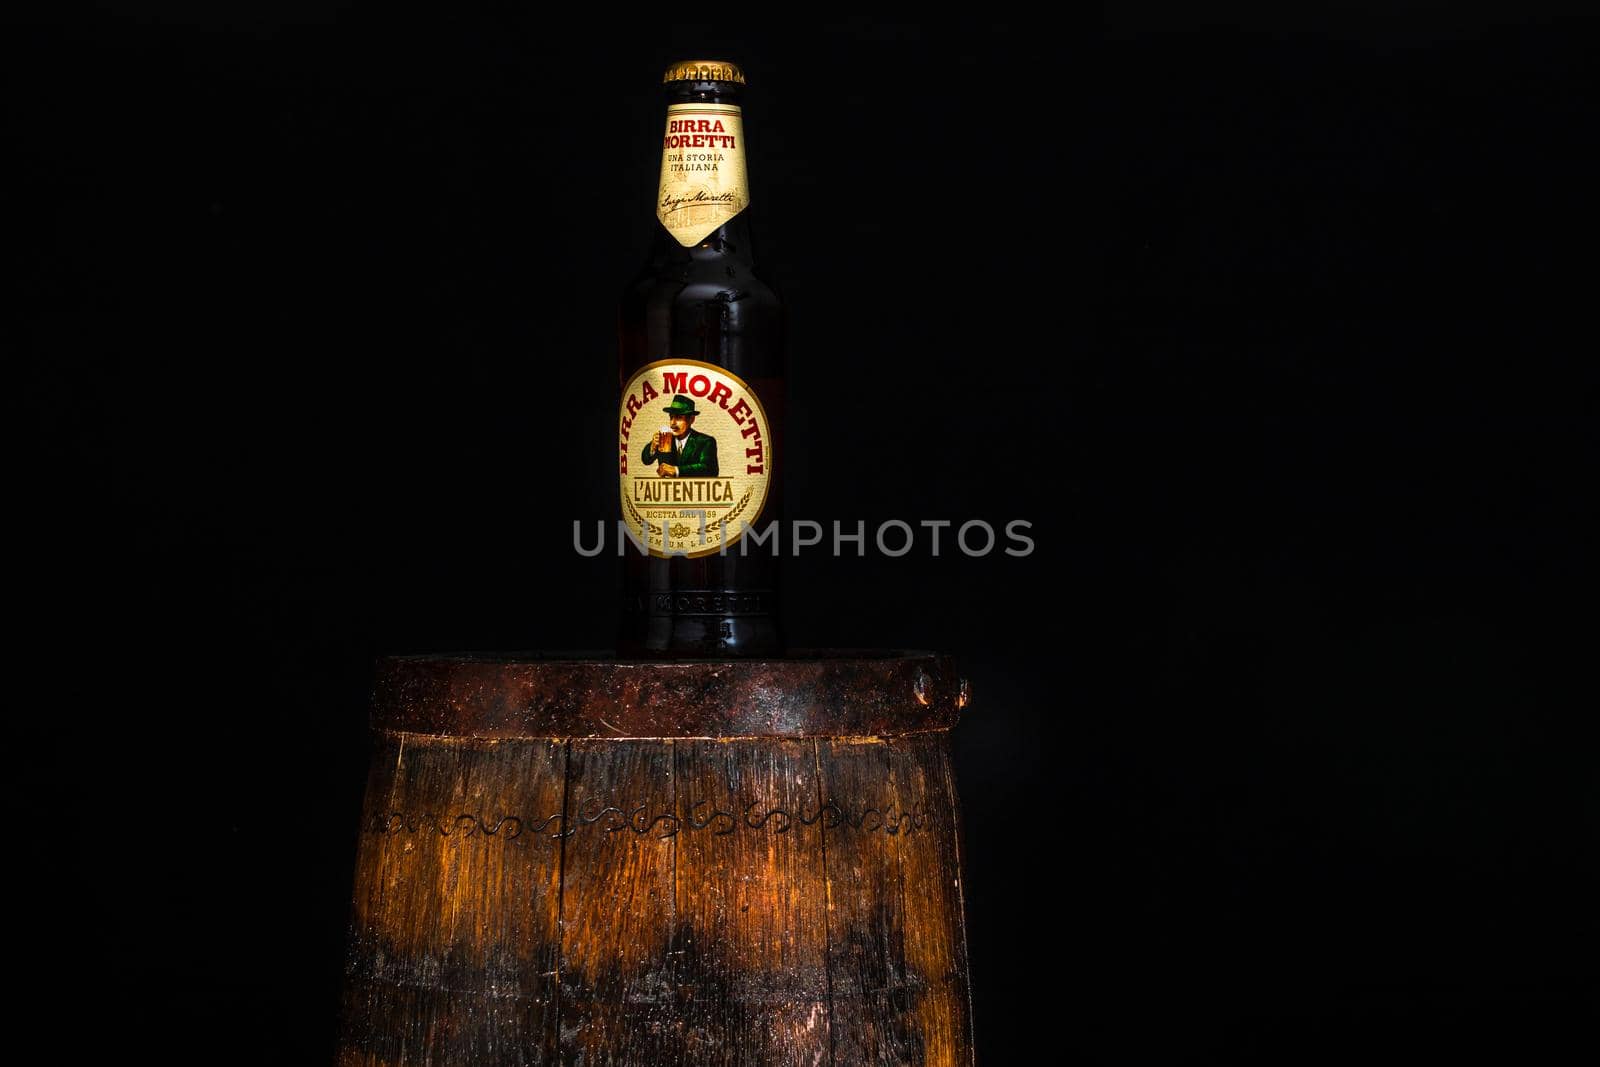 Bottle of Birra Moretti beer on wooden barrel with dark background. Illustrative editorial photo Bucharest, Romania, 2021 by vladispas